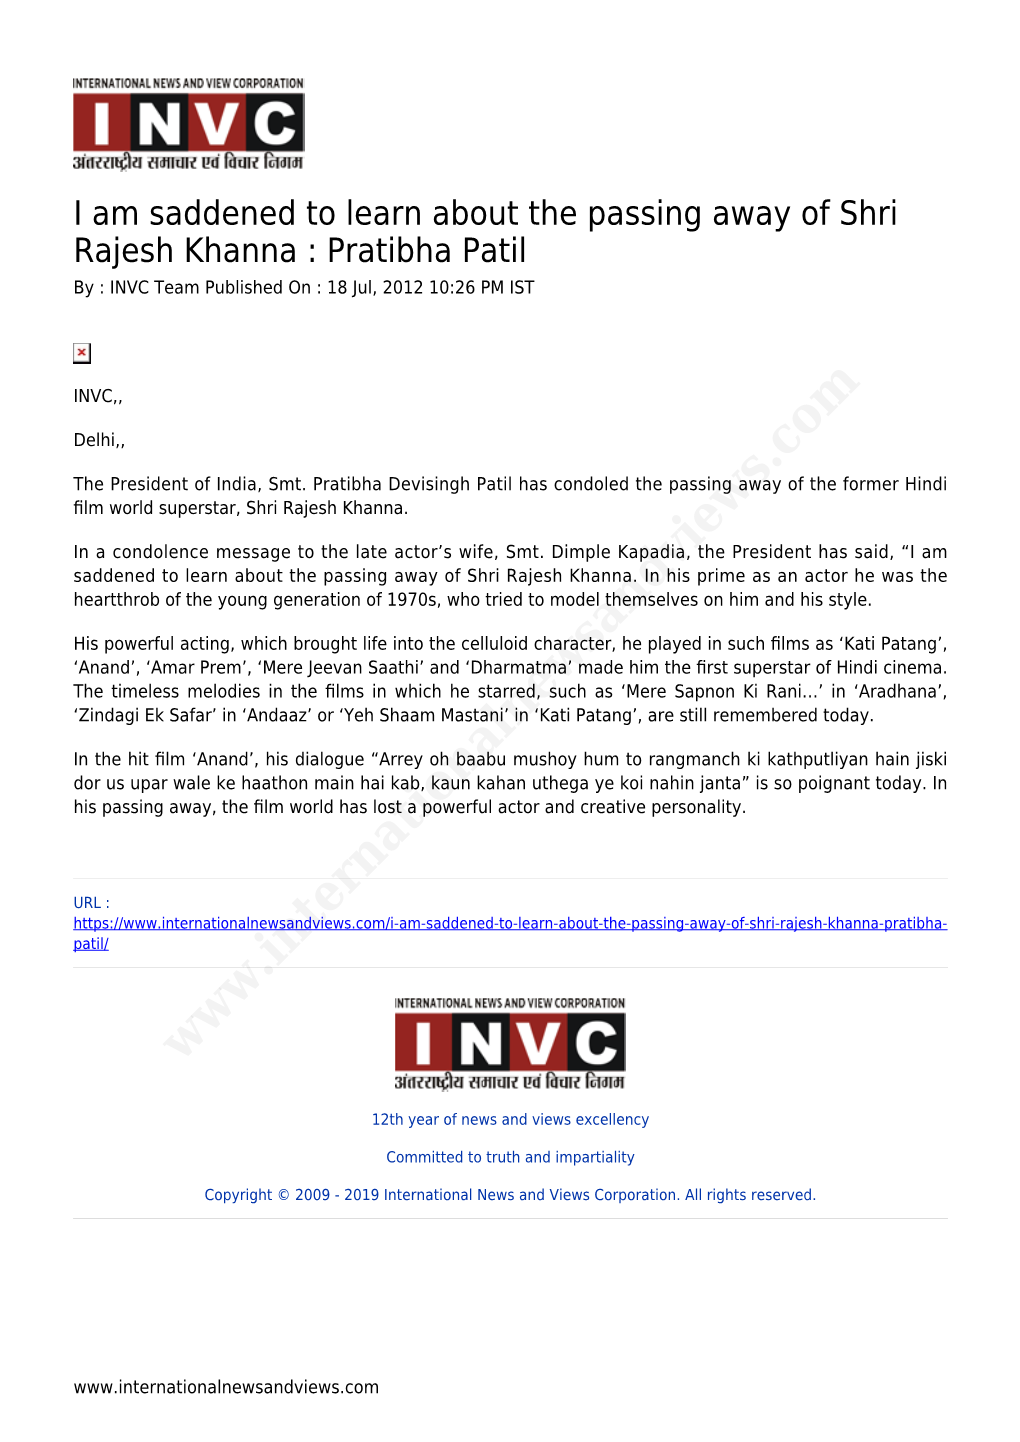 Pratibha Patil by : INVC Team Published on : 18 Jul, 2012 10:26 PM IST